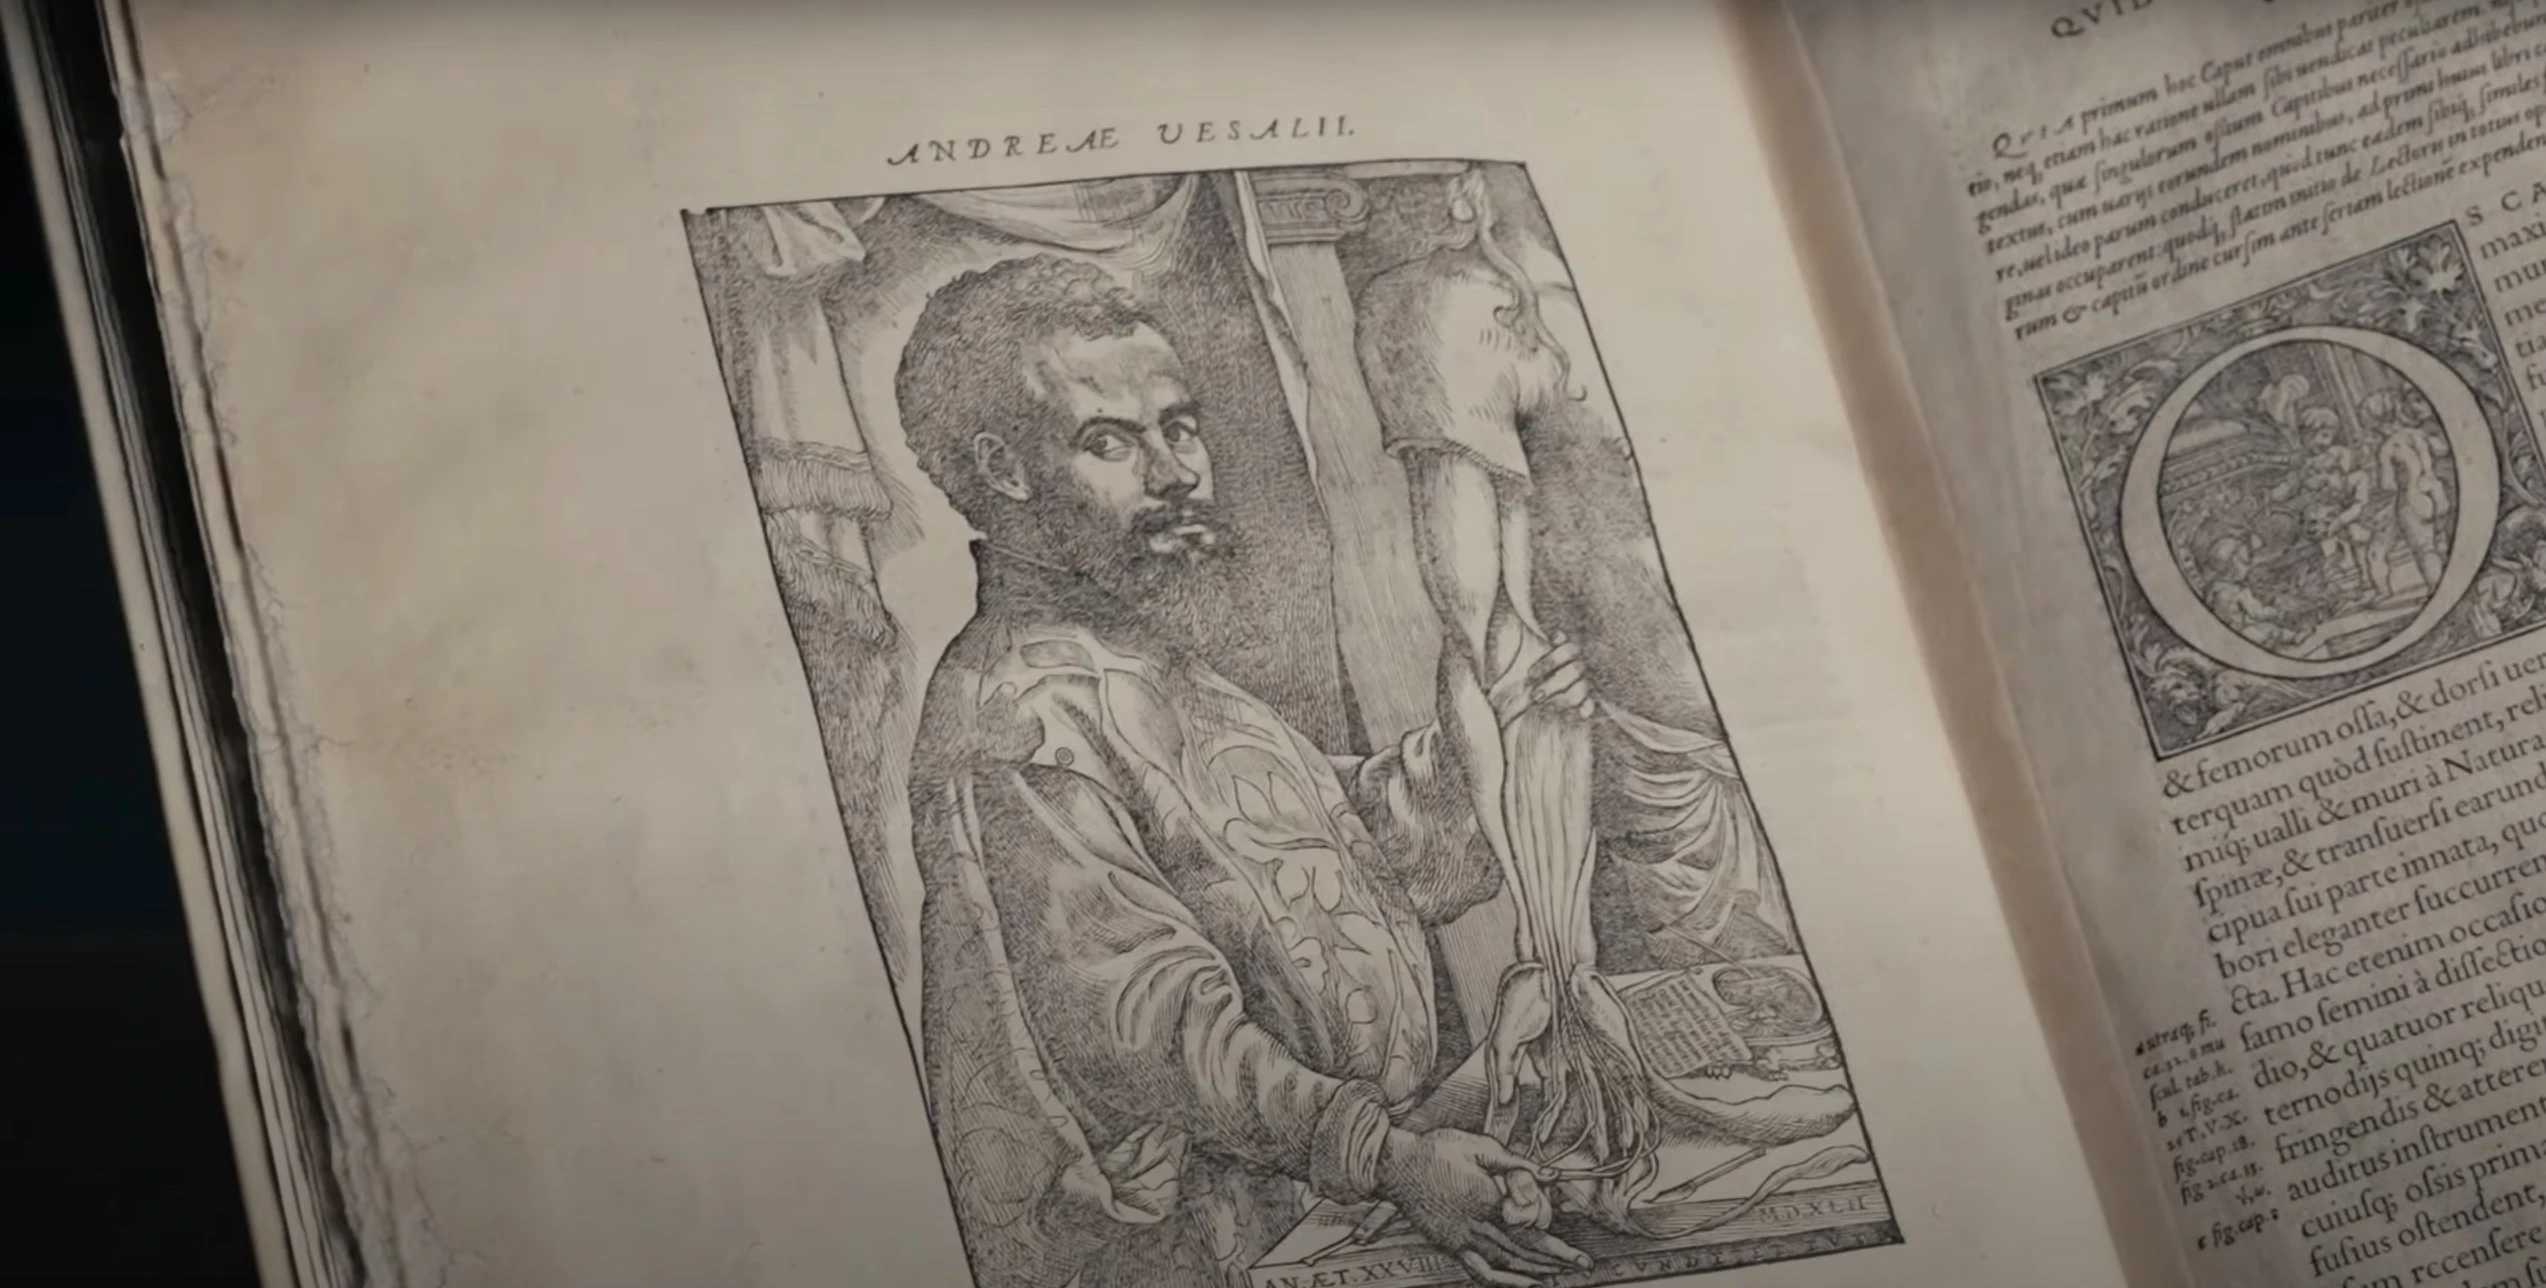 Vesalius personally annotated edition of De humani corporis fabrica. Credit: Christie's